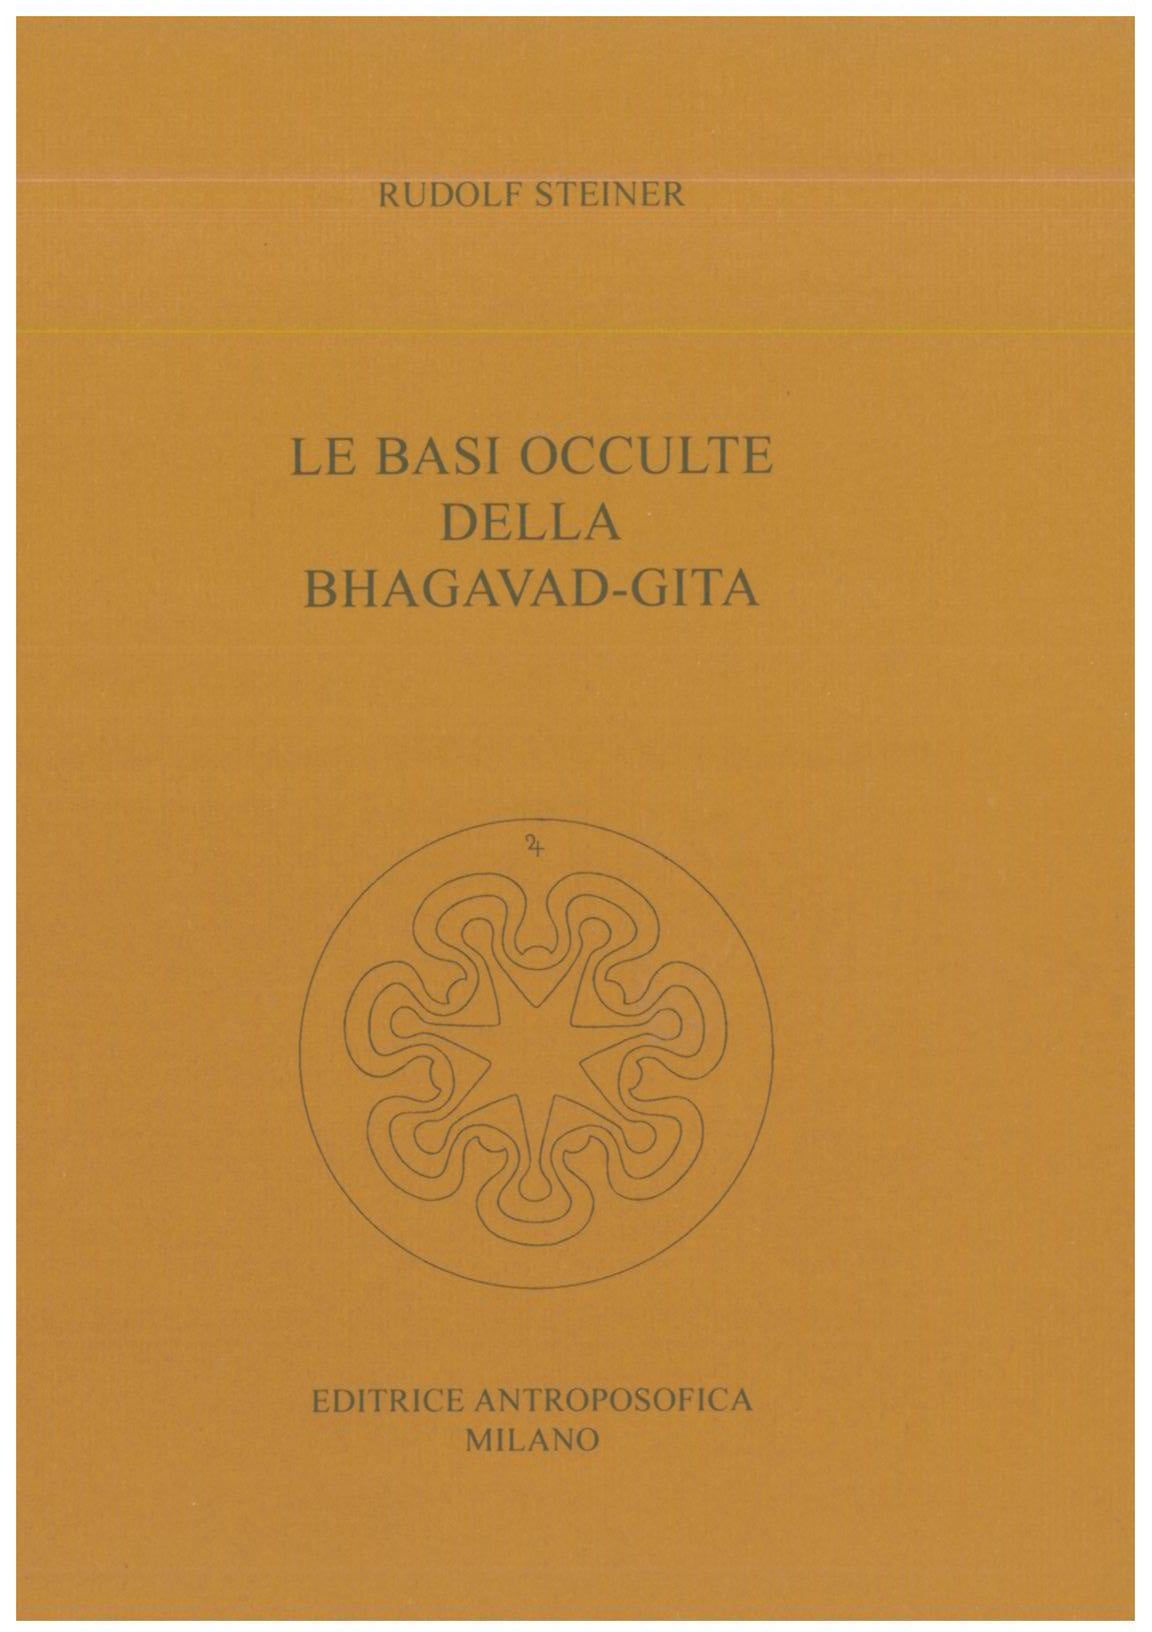 Le basi occulte della Bhagavad-Gita - Rudolf Steiner